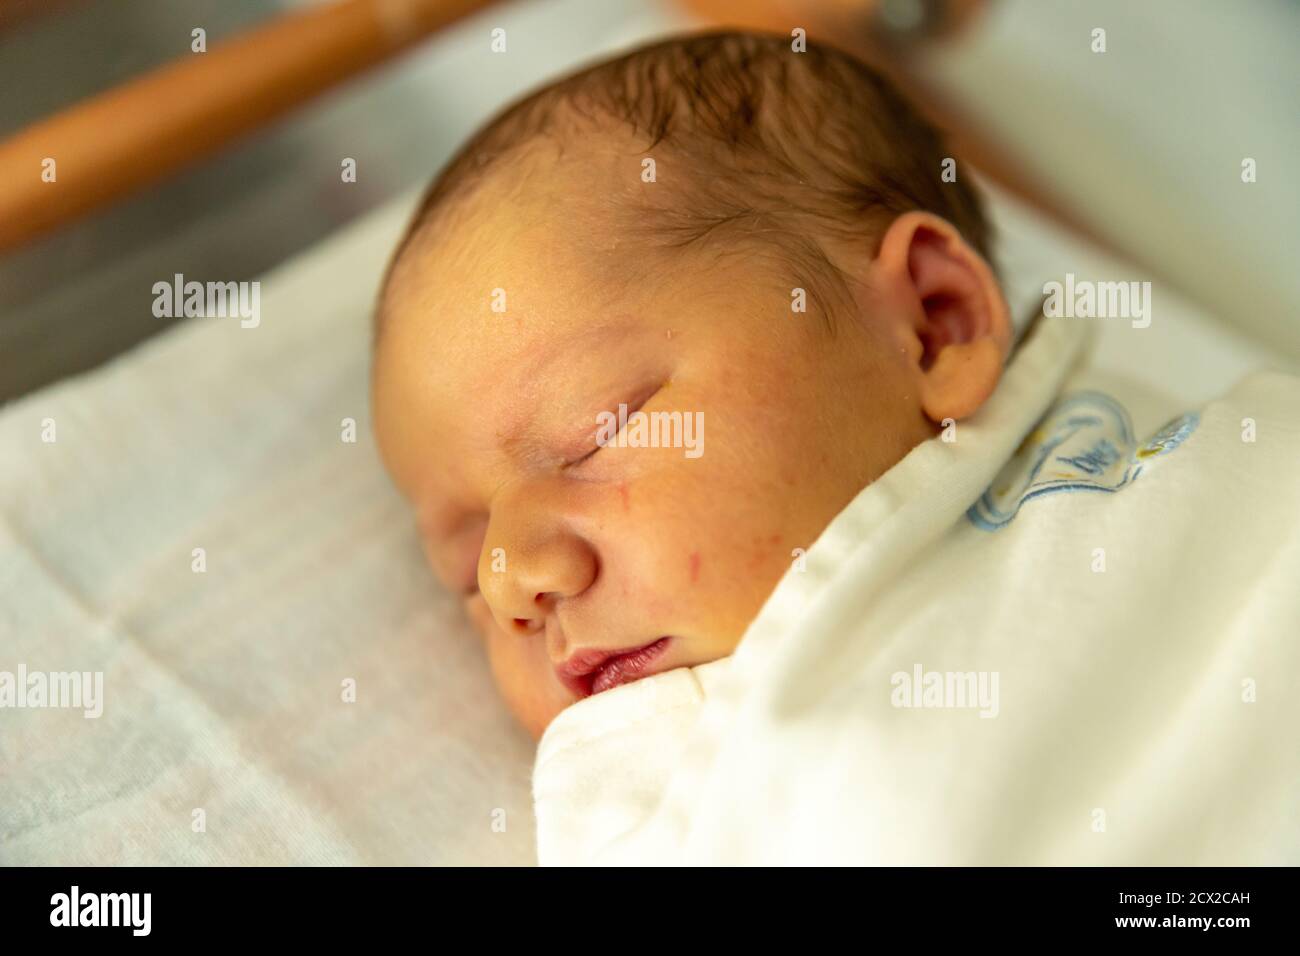 Beautiful newborn baby sleeping peacefully. Stock Photo